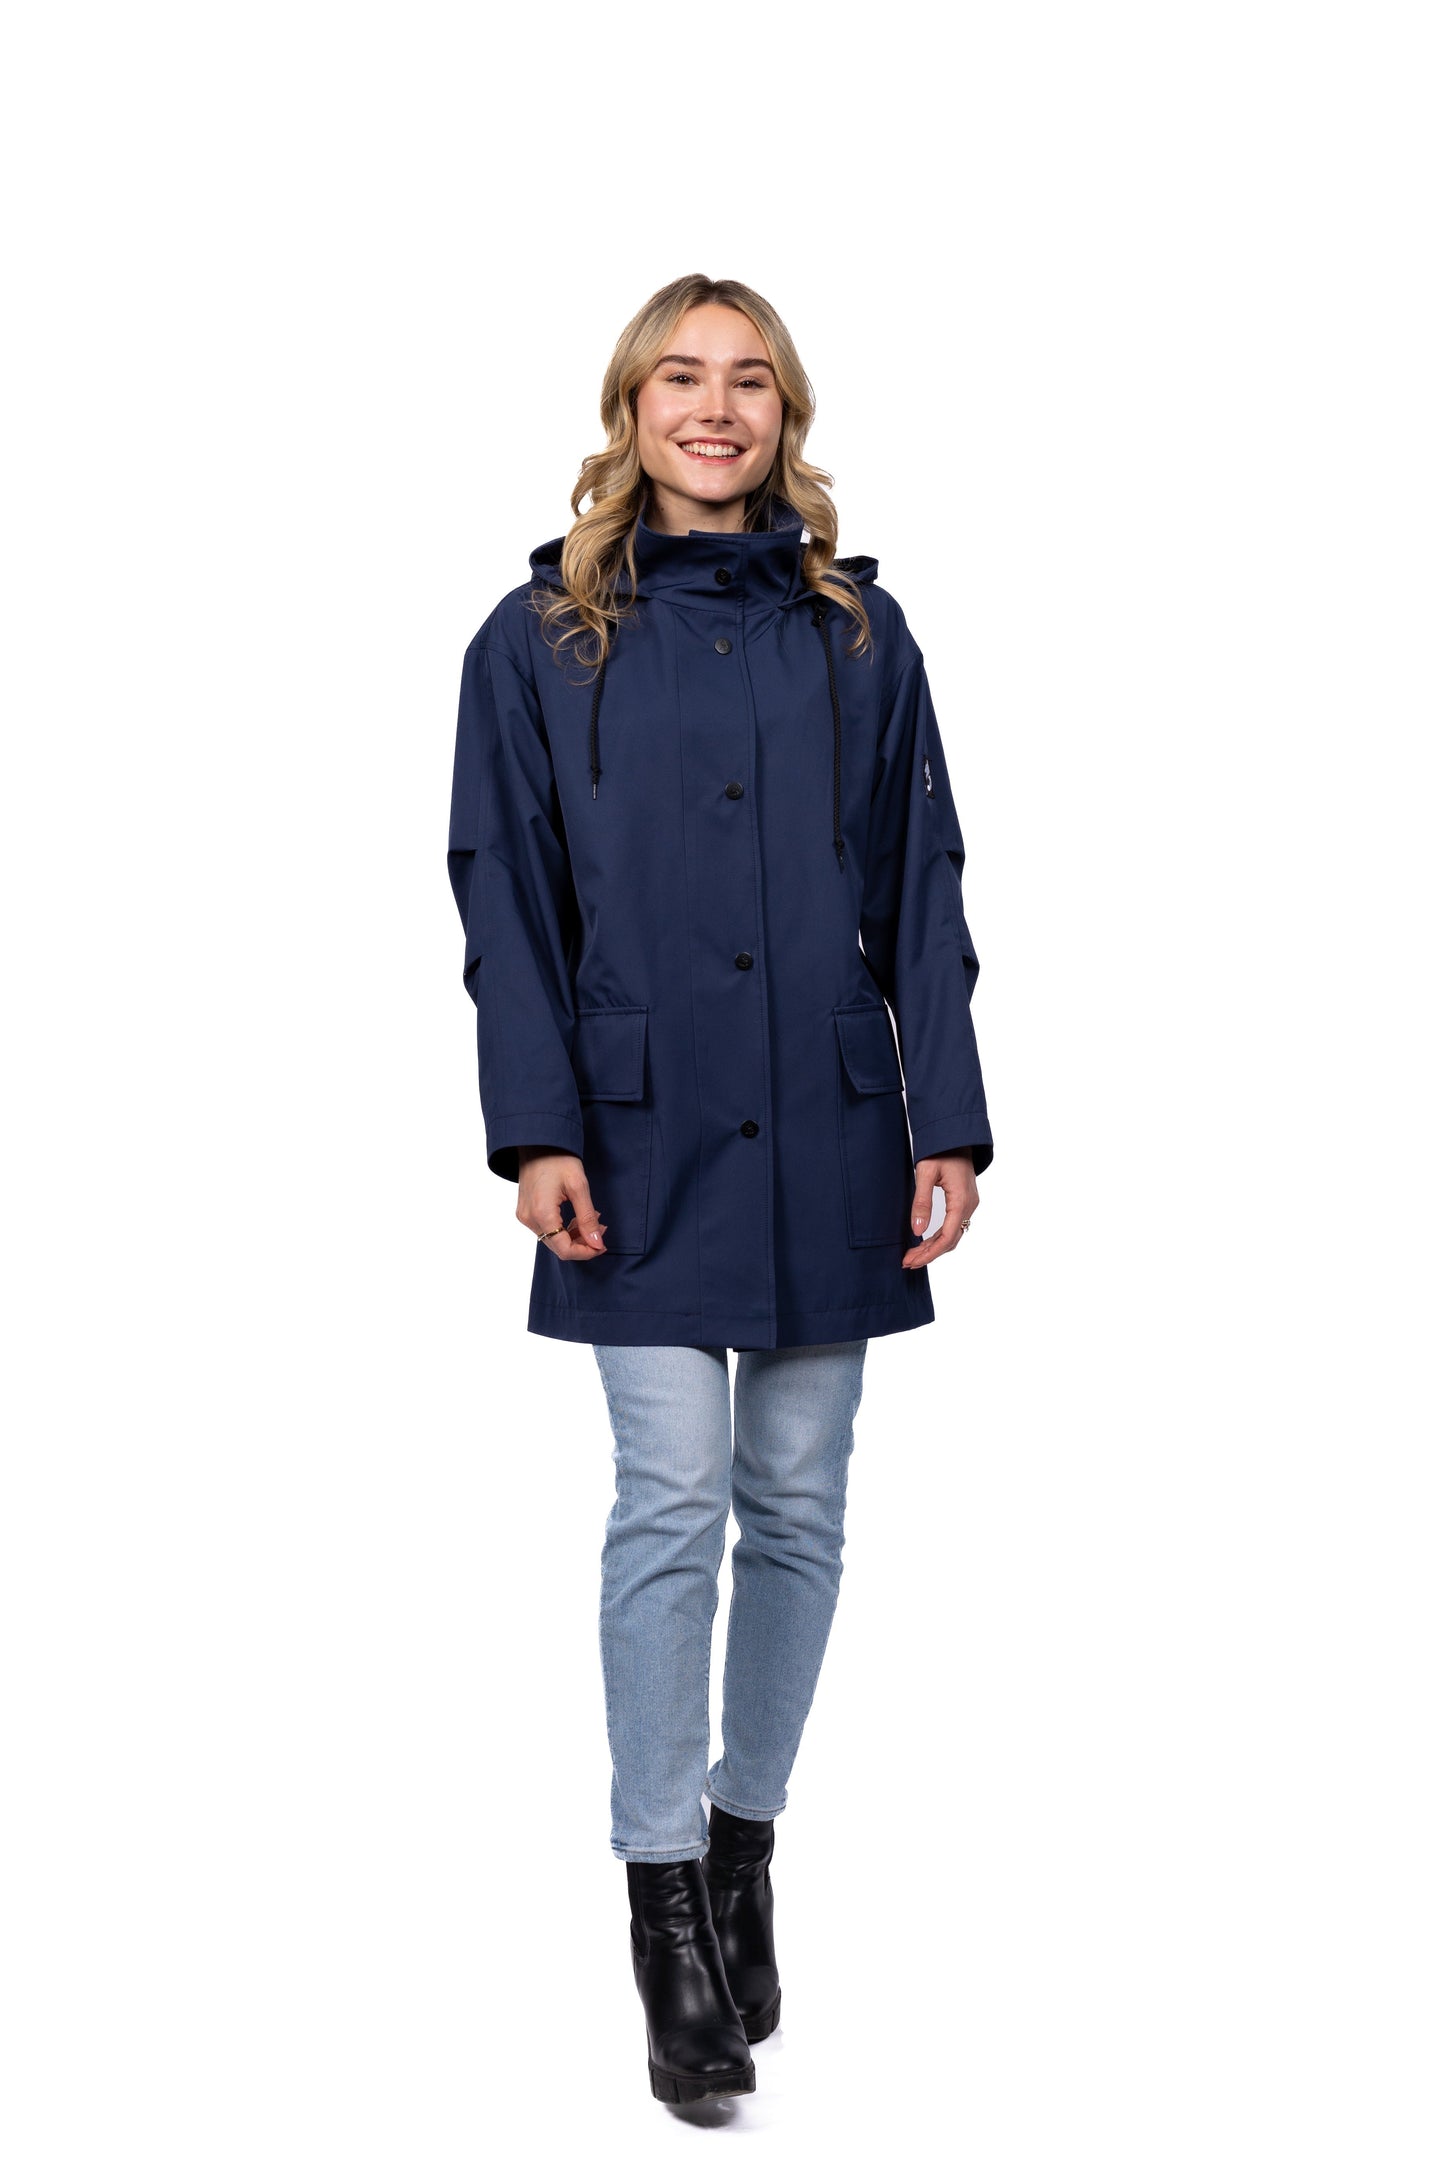 Desloups urban waterproof coat with hood, loose with belt for women - Green 